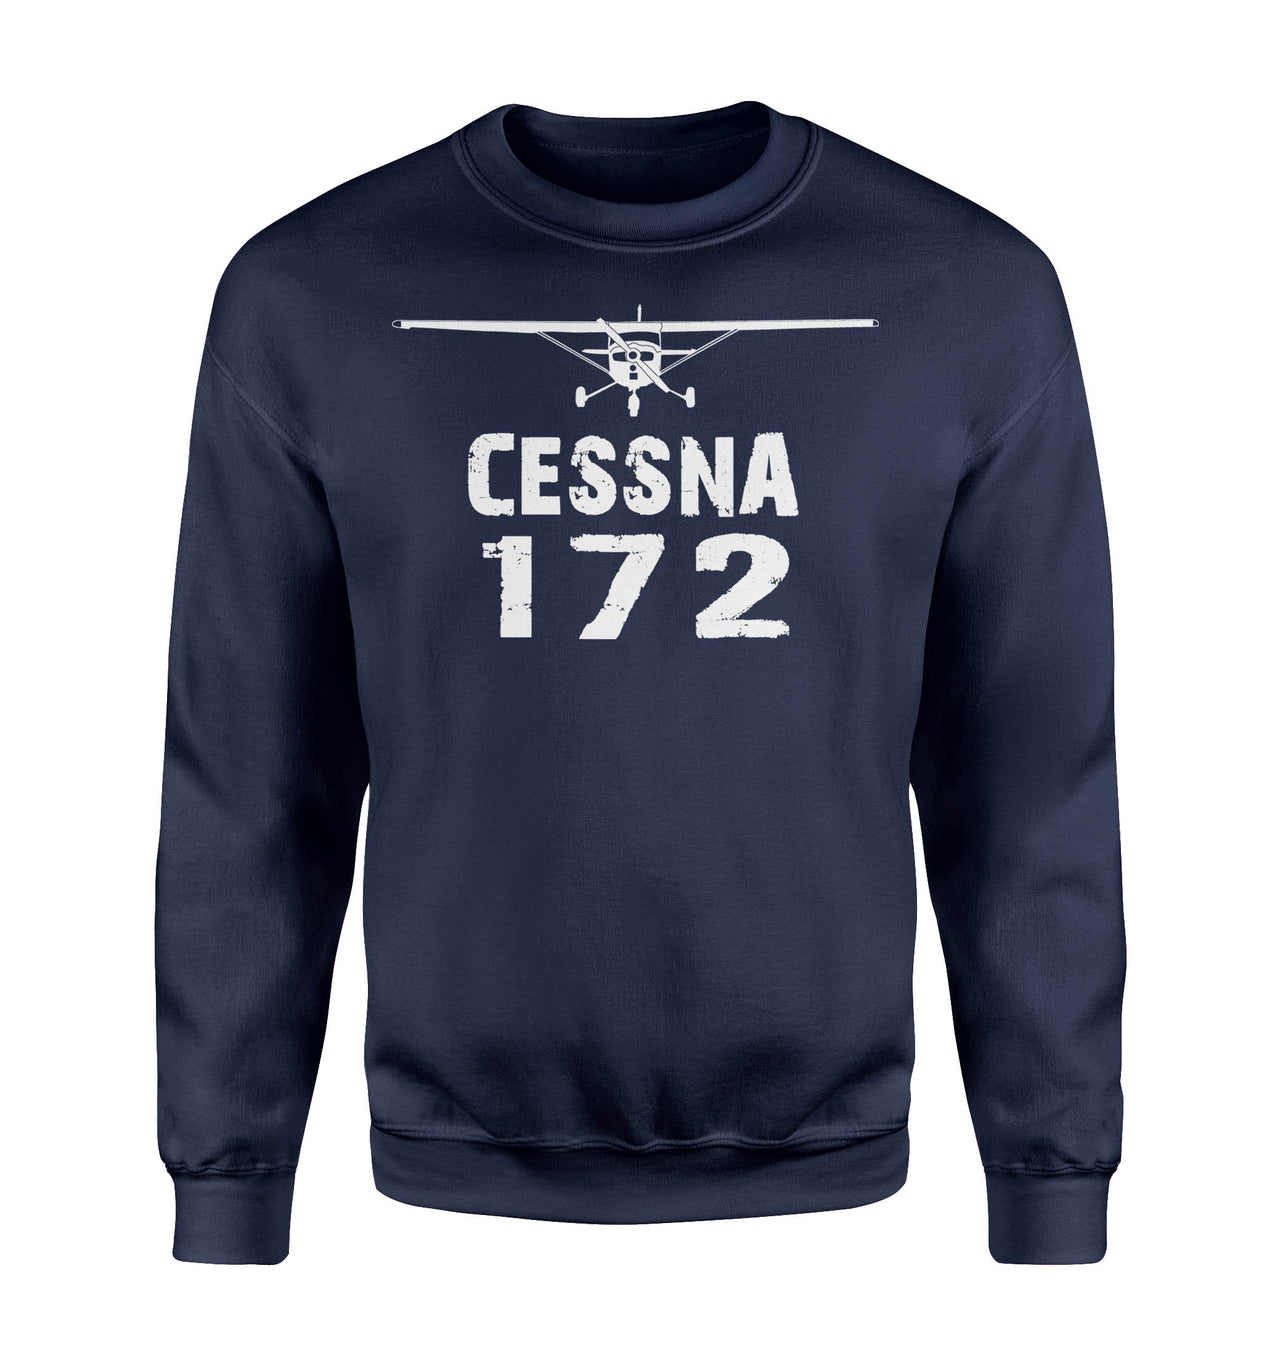 Cessna 172 & Plane Designed Sweatshirts